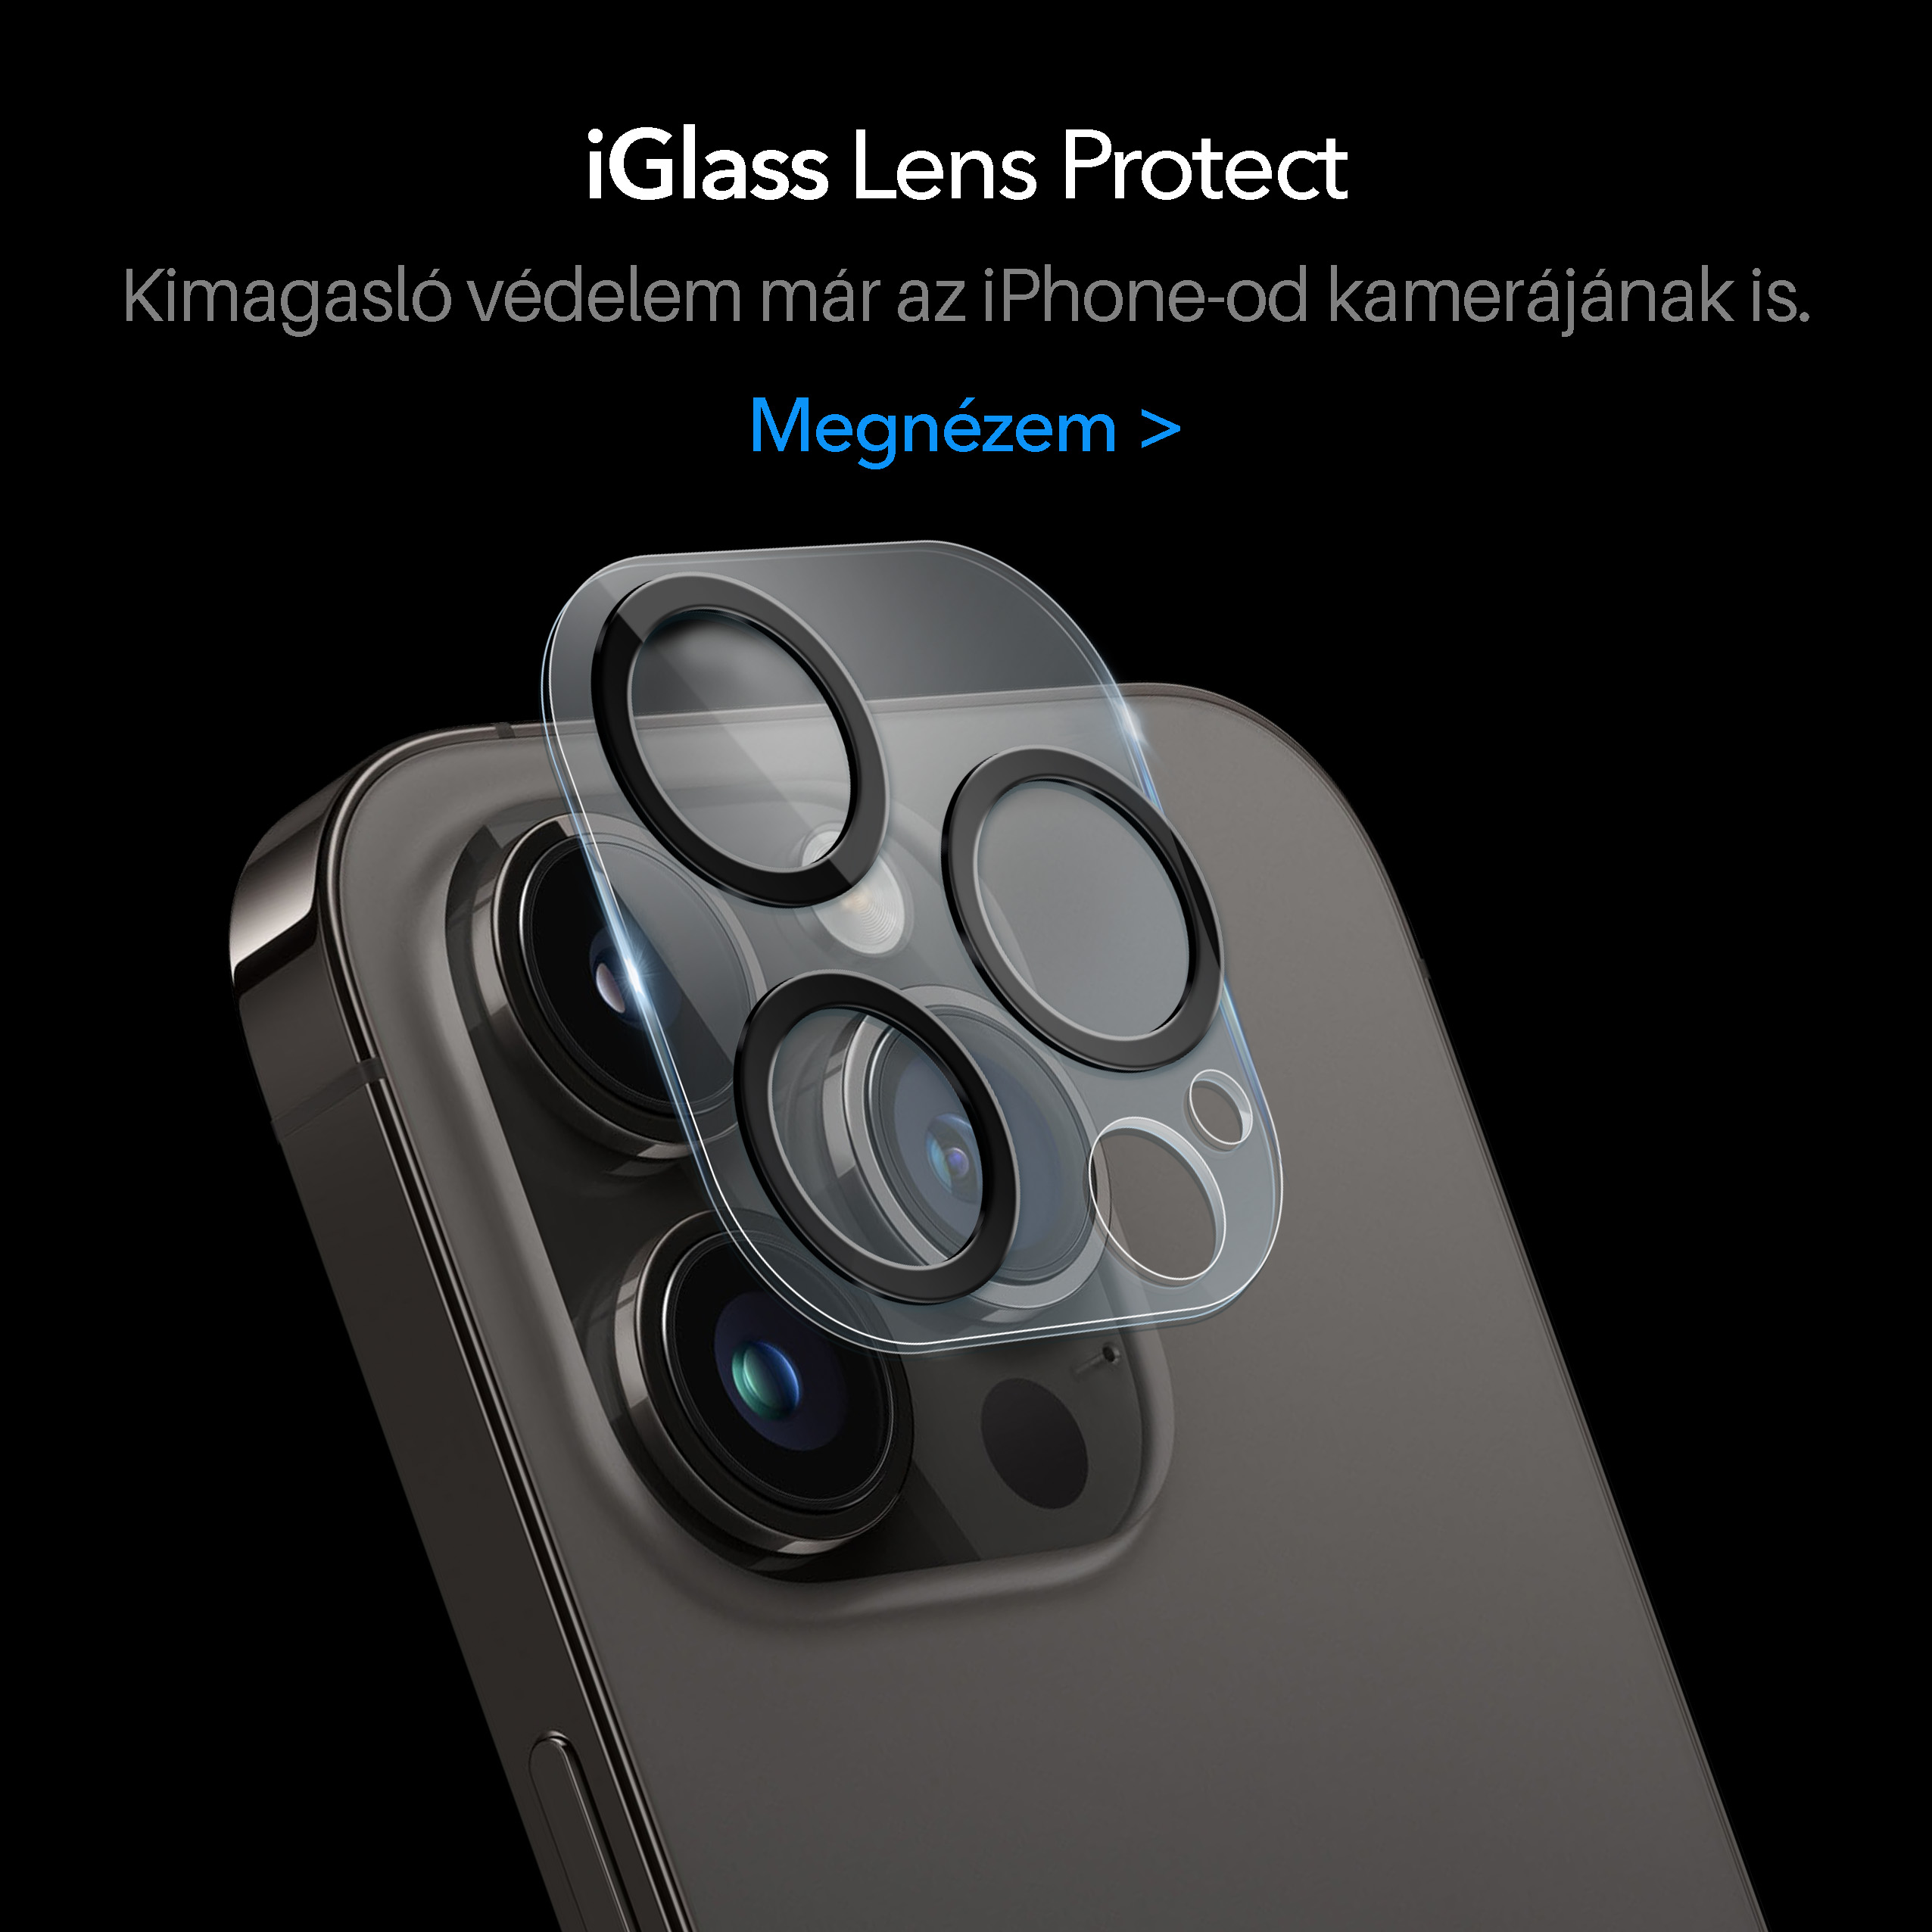 kocka lens protect gombbal-iglass-iphone-uvegfolia